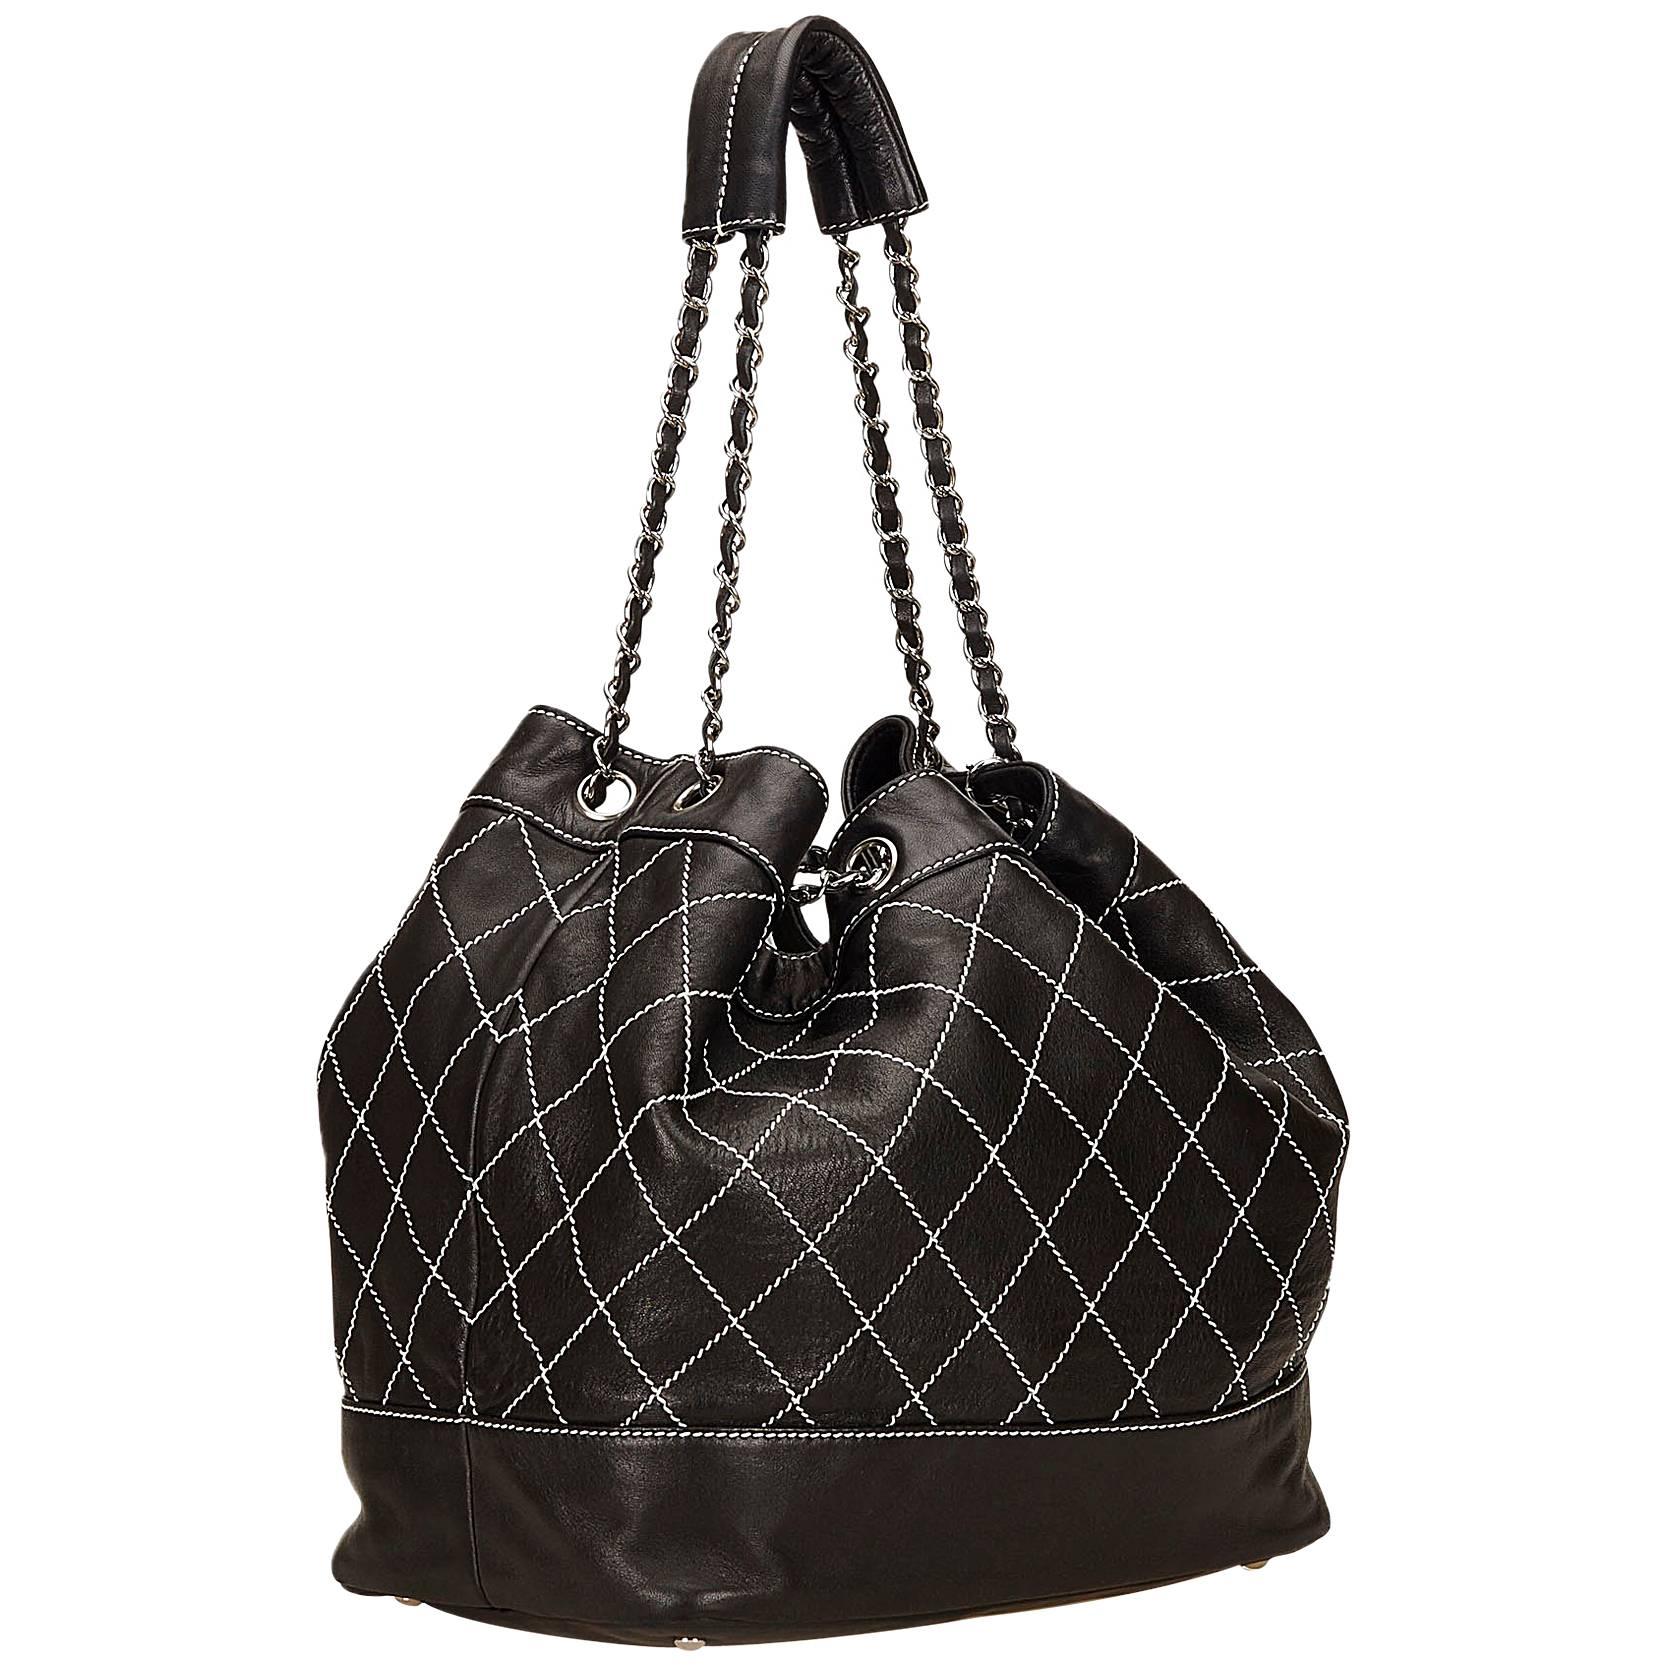 Chanel Black and White Wild Stitch Drawstring Tote Bag